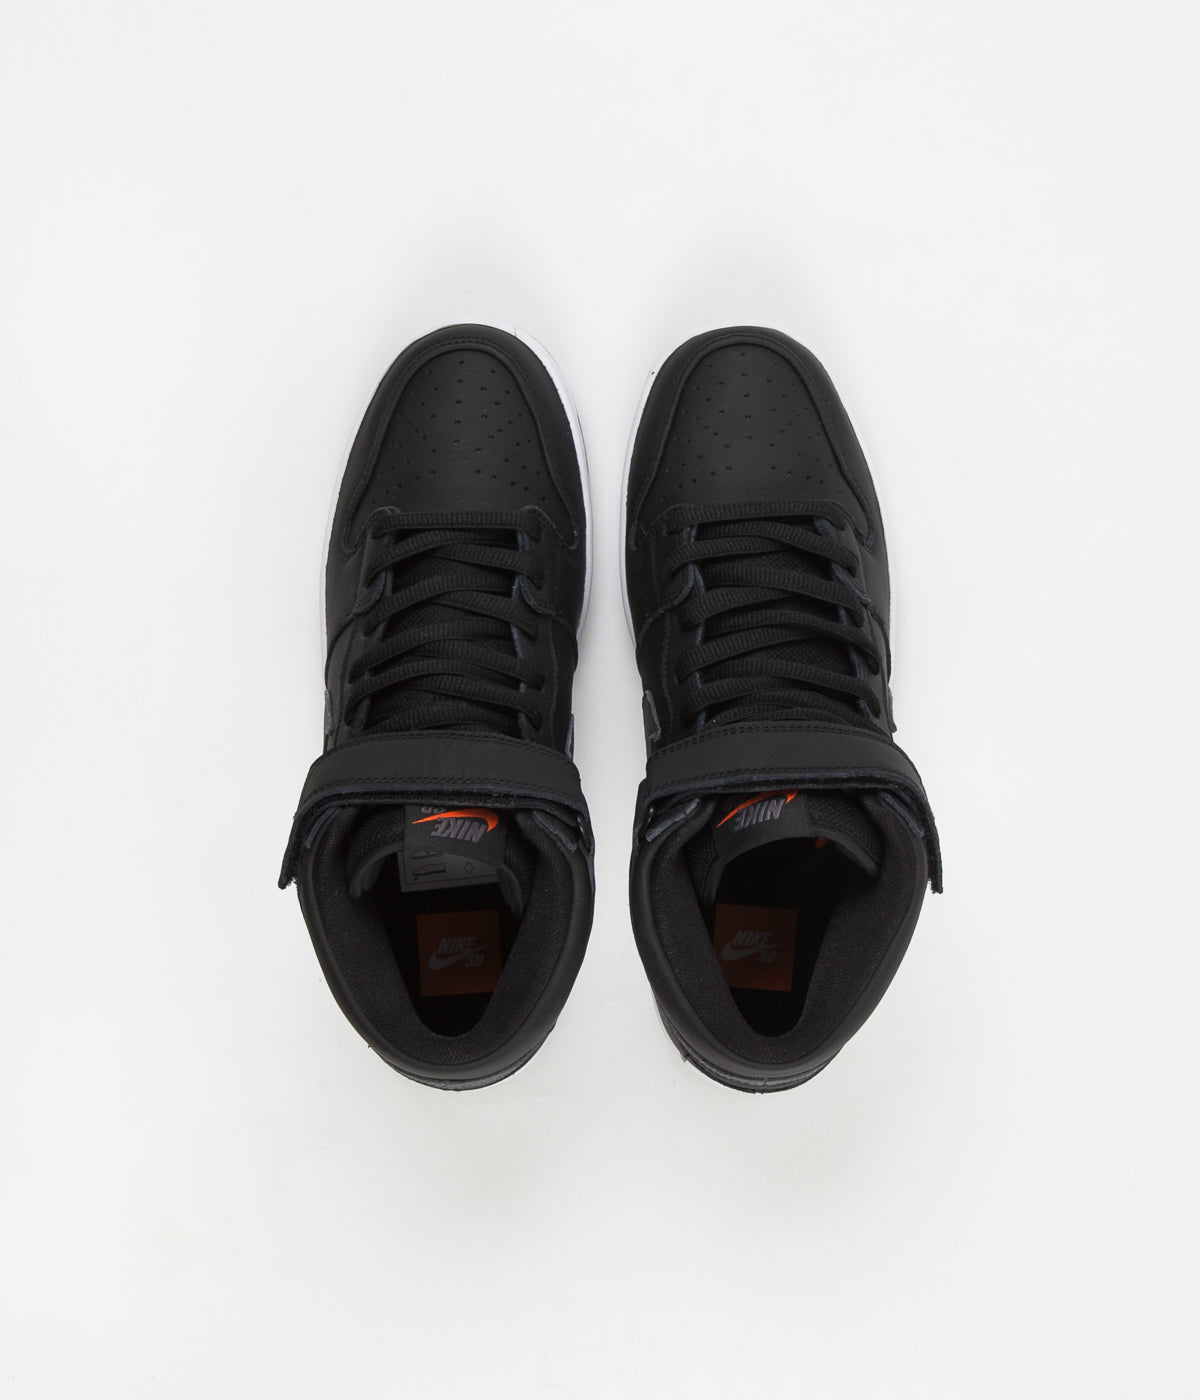 Nike SB Orange Label Dunk Mid Pro Shoes - Black / Dark Grey